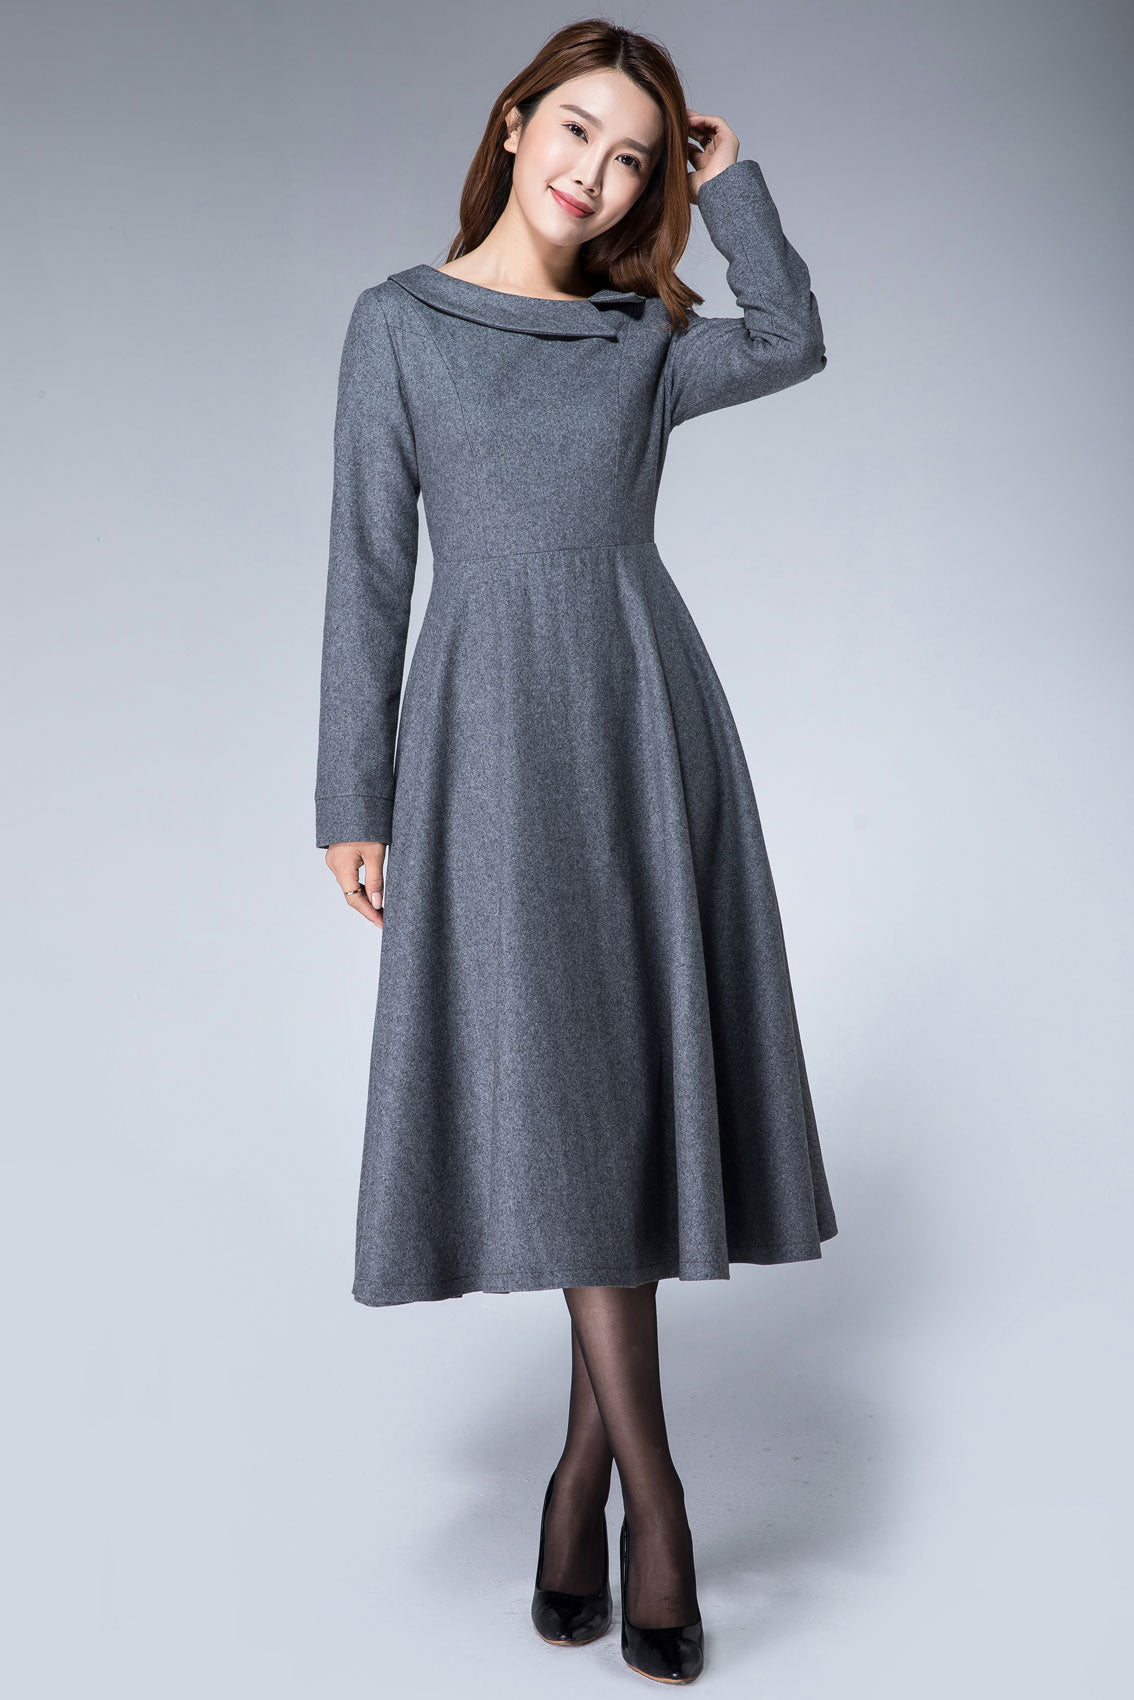 vintage inspired wool maxi dress 1611# – XiaoLizi